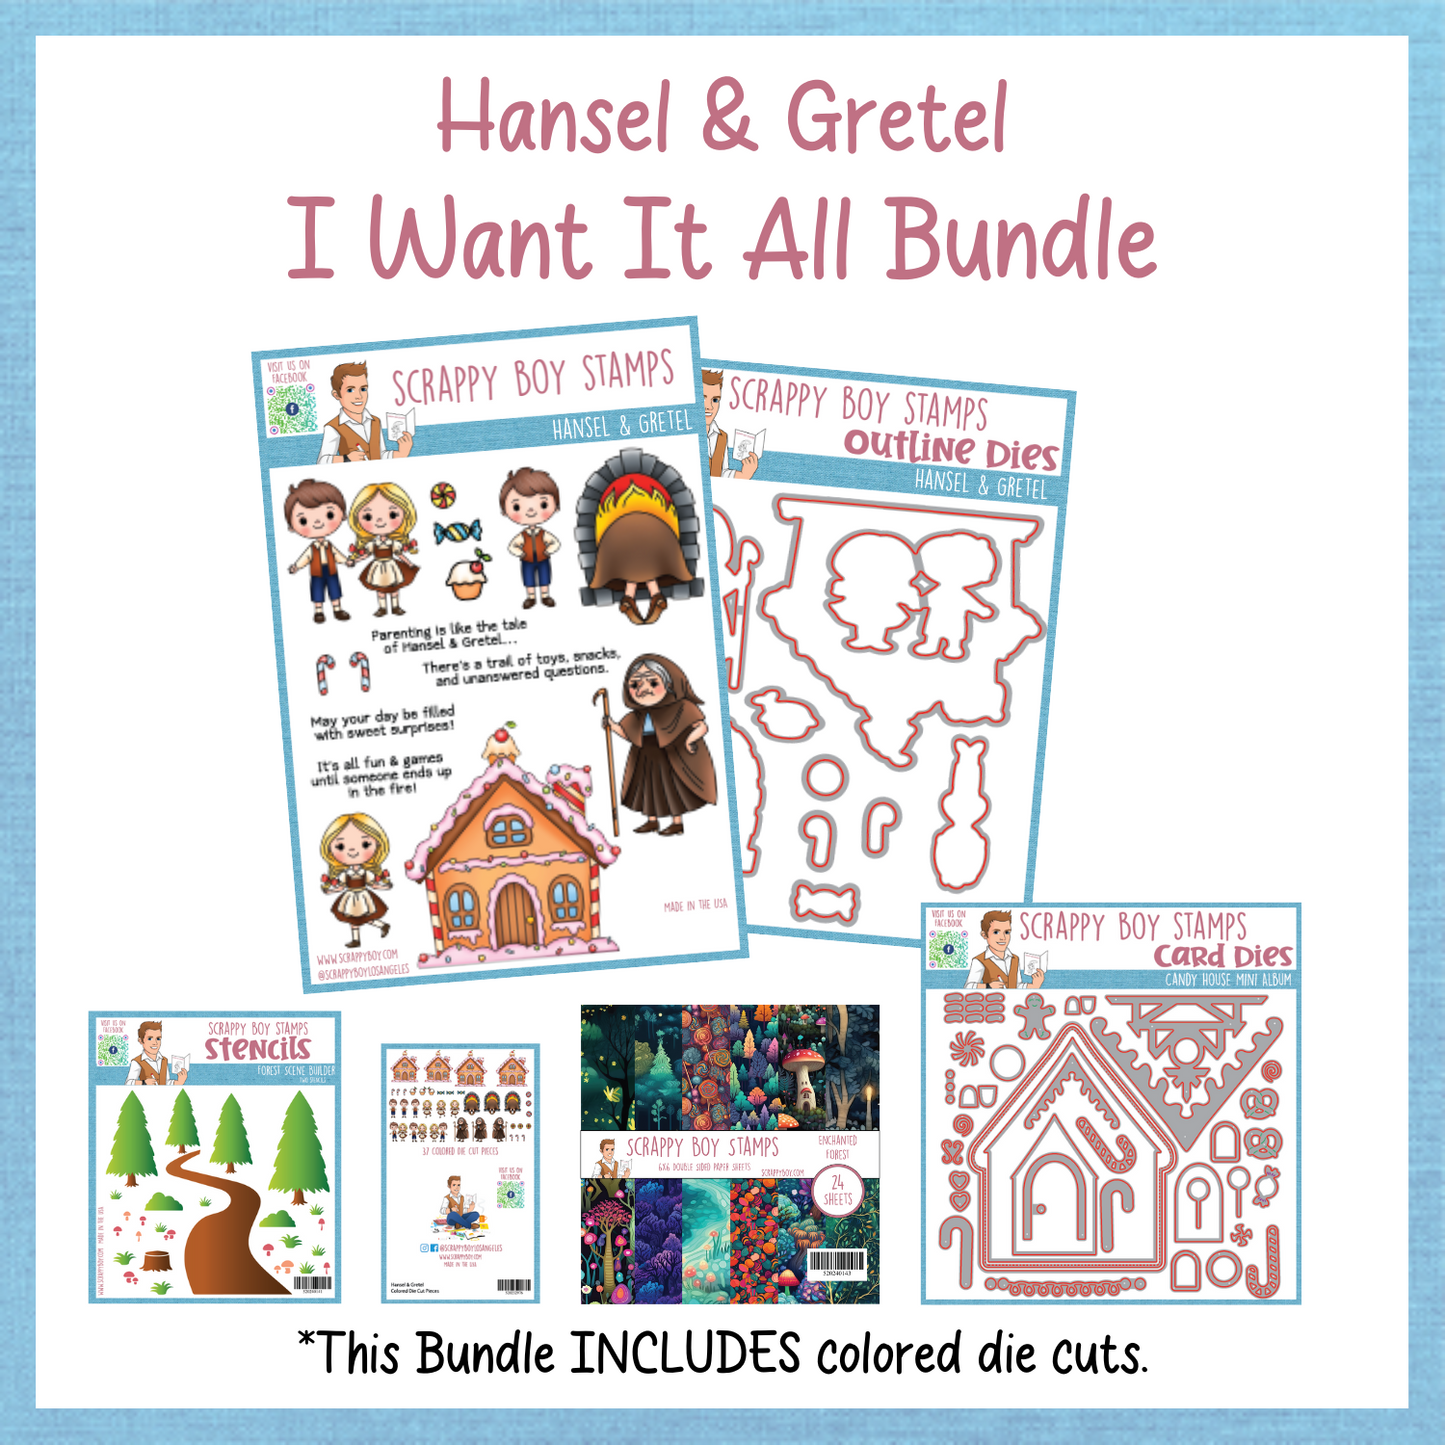 I Want It All Bundle - Hansel & Gretel Release Scrappy Boy Stamps